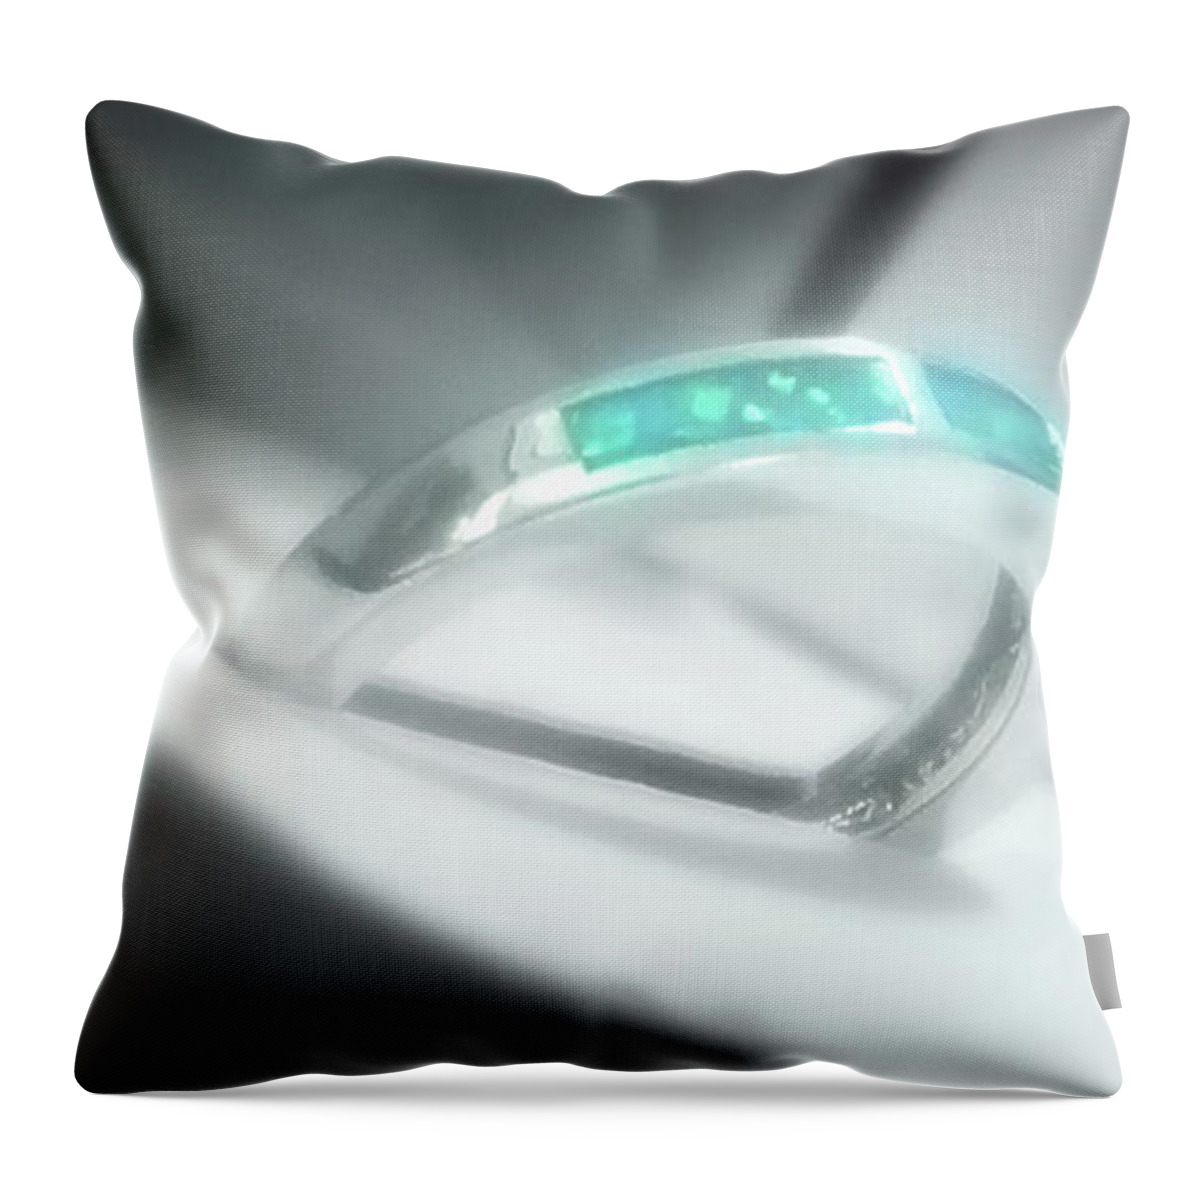 Ring Throw Pillow featuring the digital art Art - The Ring by Matthias Zegveld